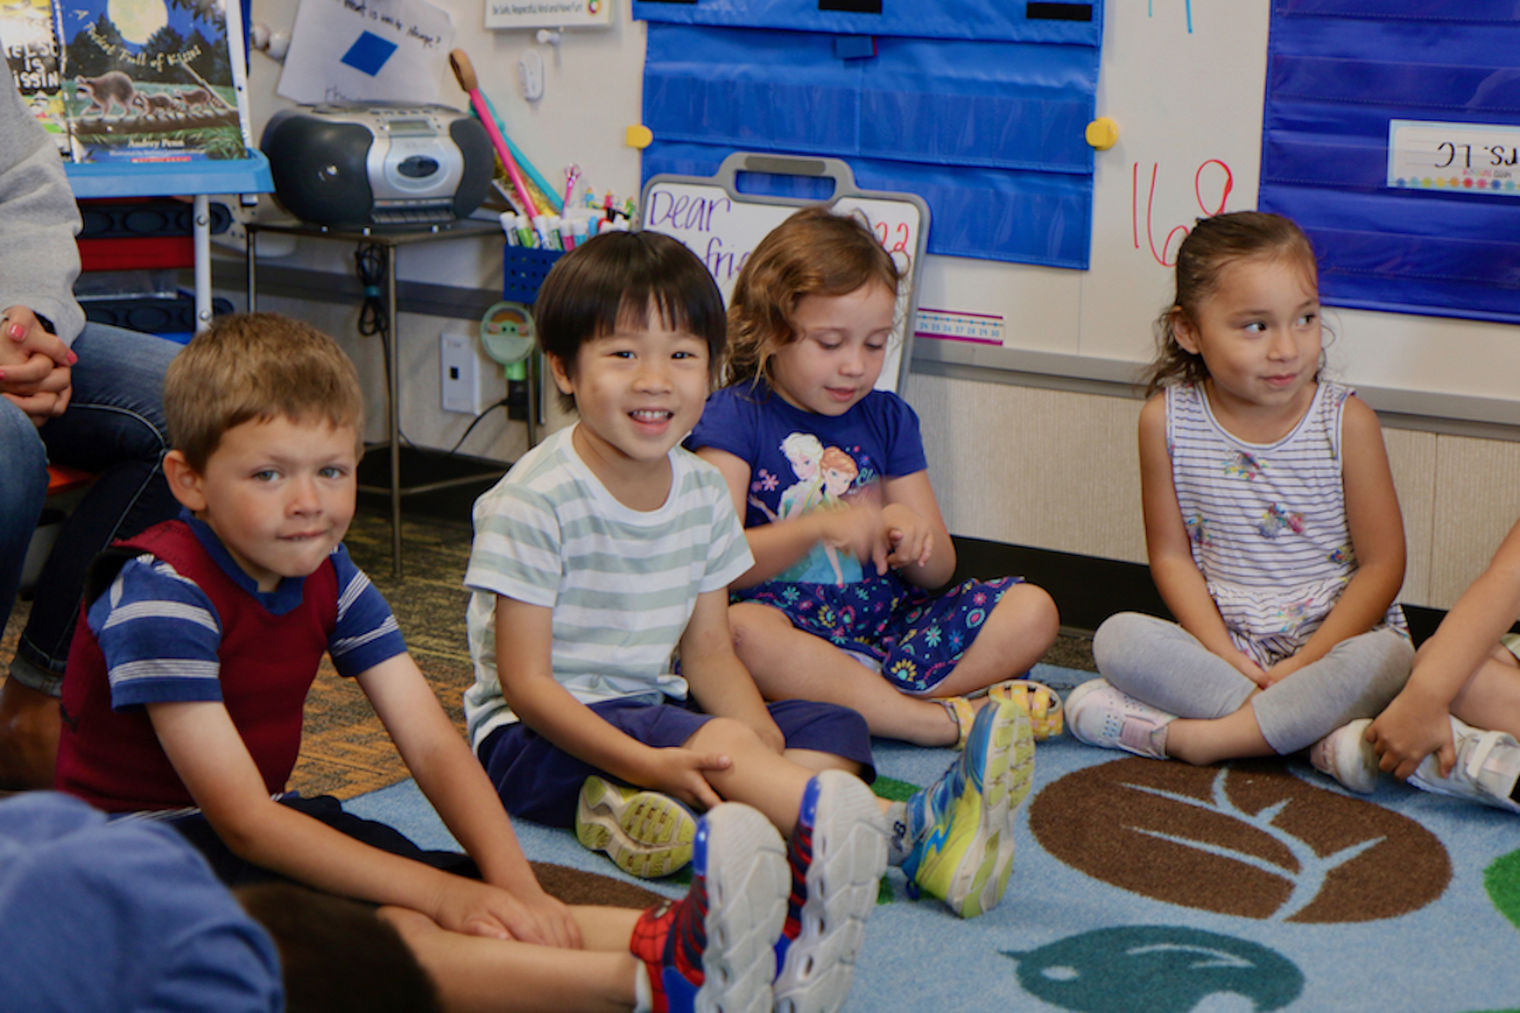 four kindergarten children sitting on the floor and smiling